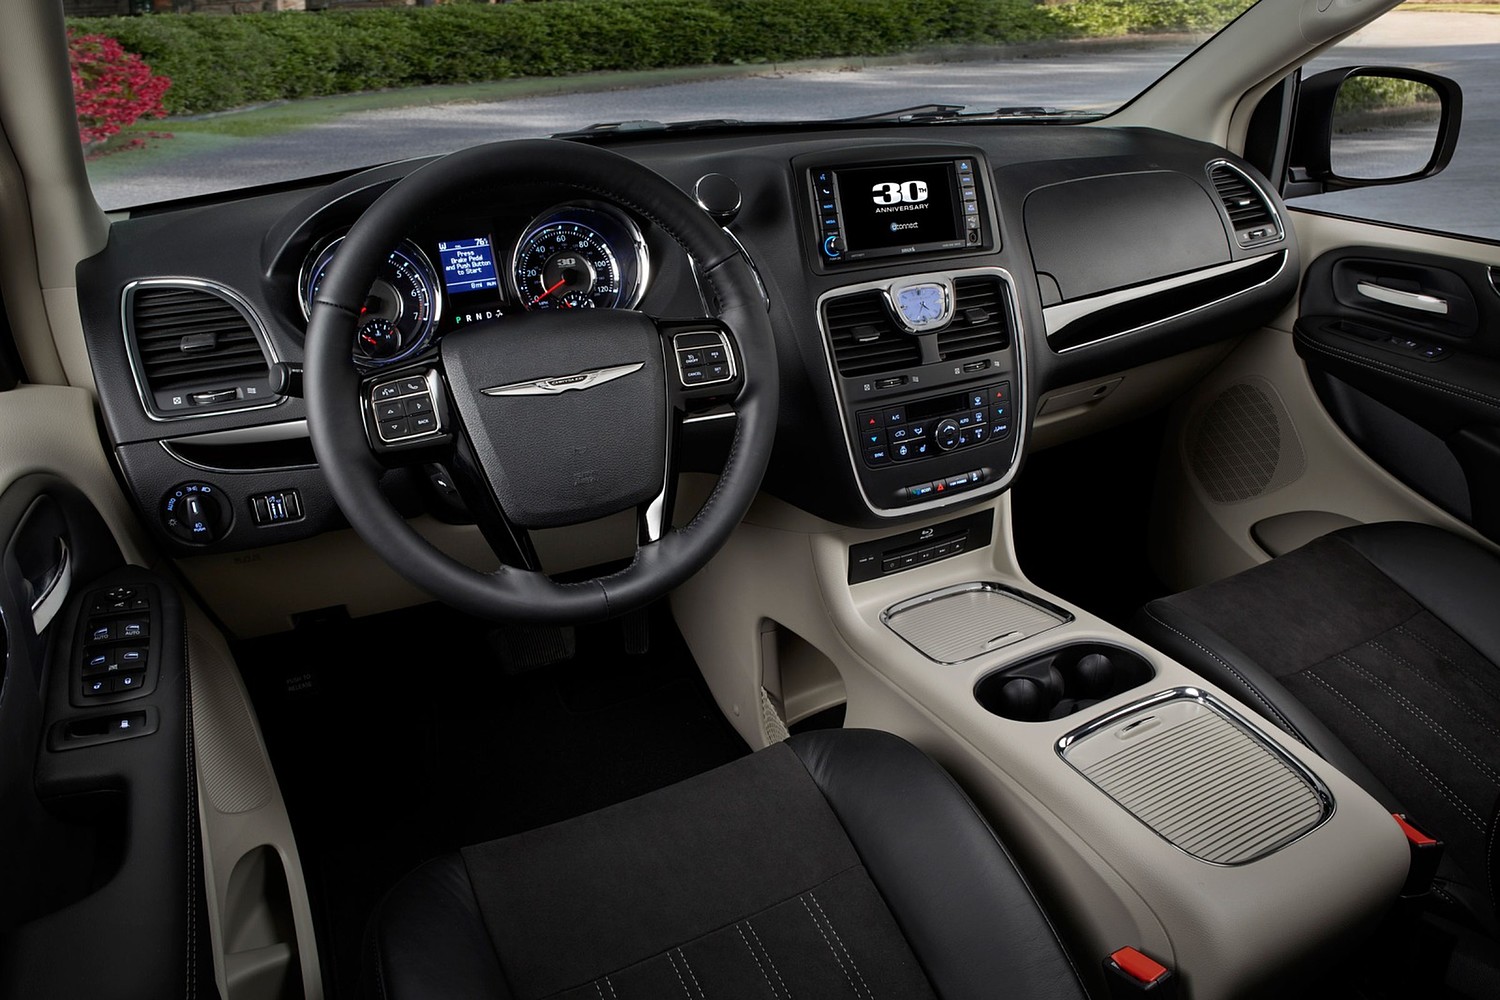 2016 Chrysler Town and Country Anniversary Edition Passenger Minivan Interior